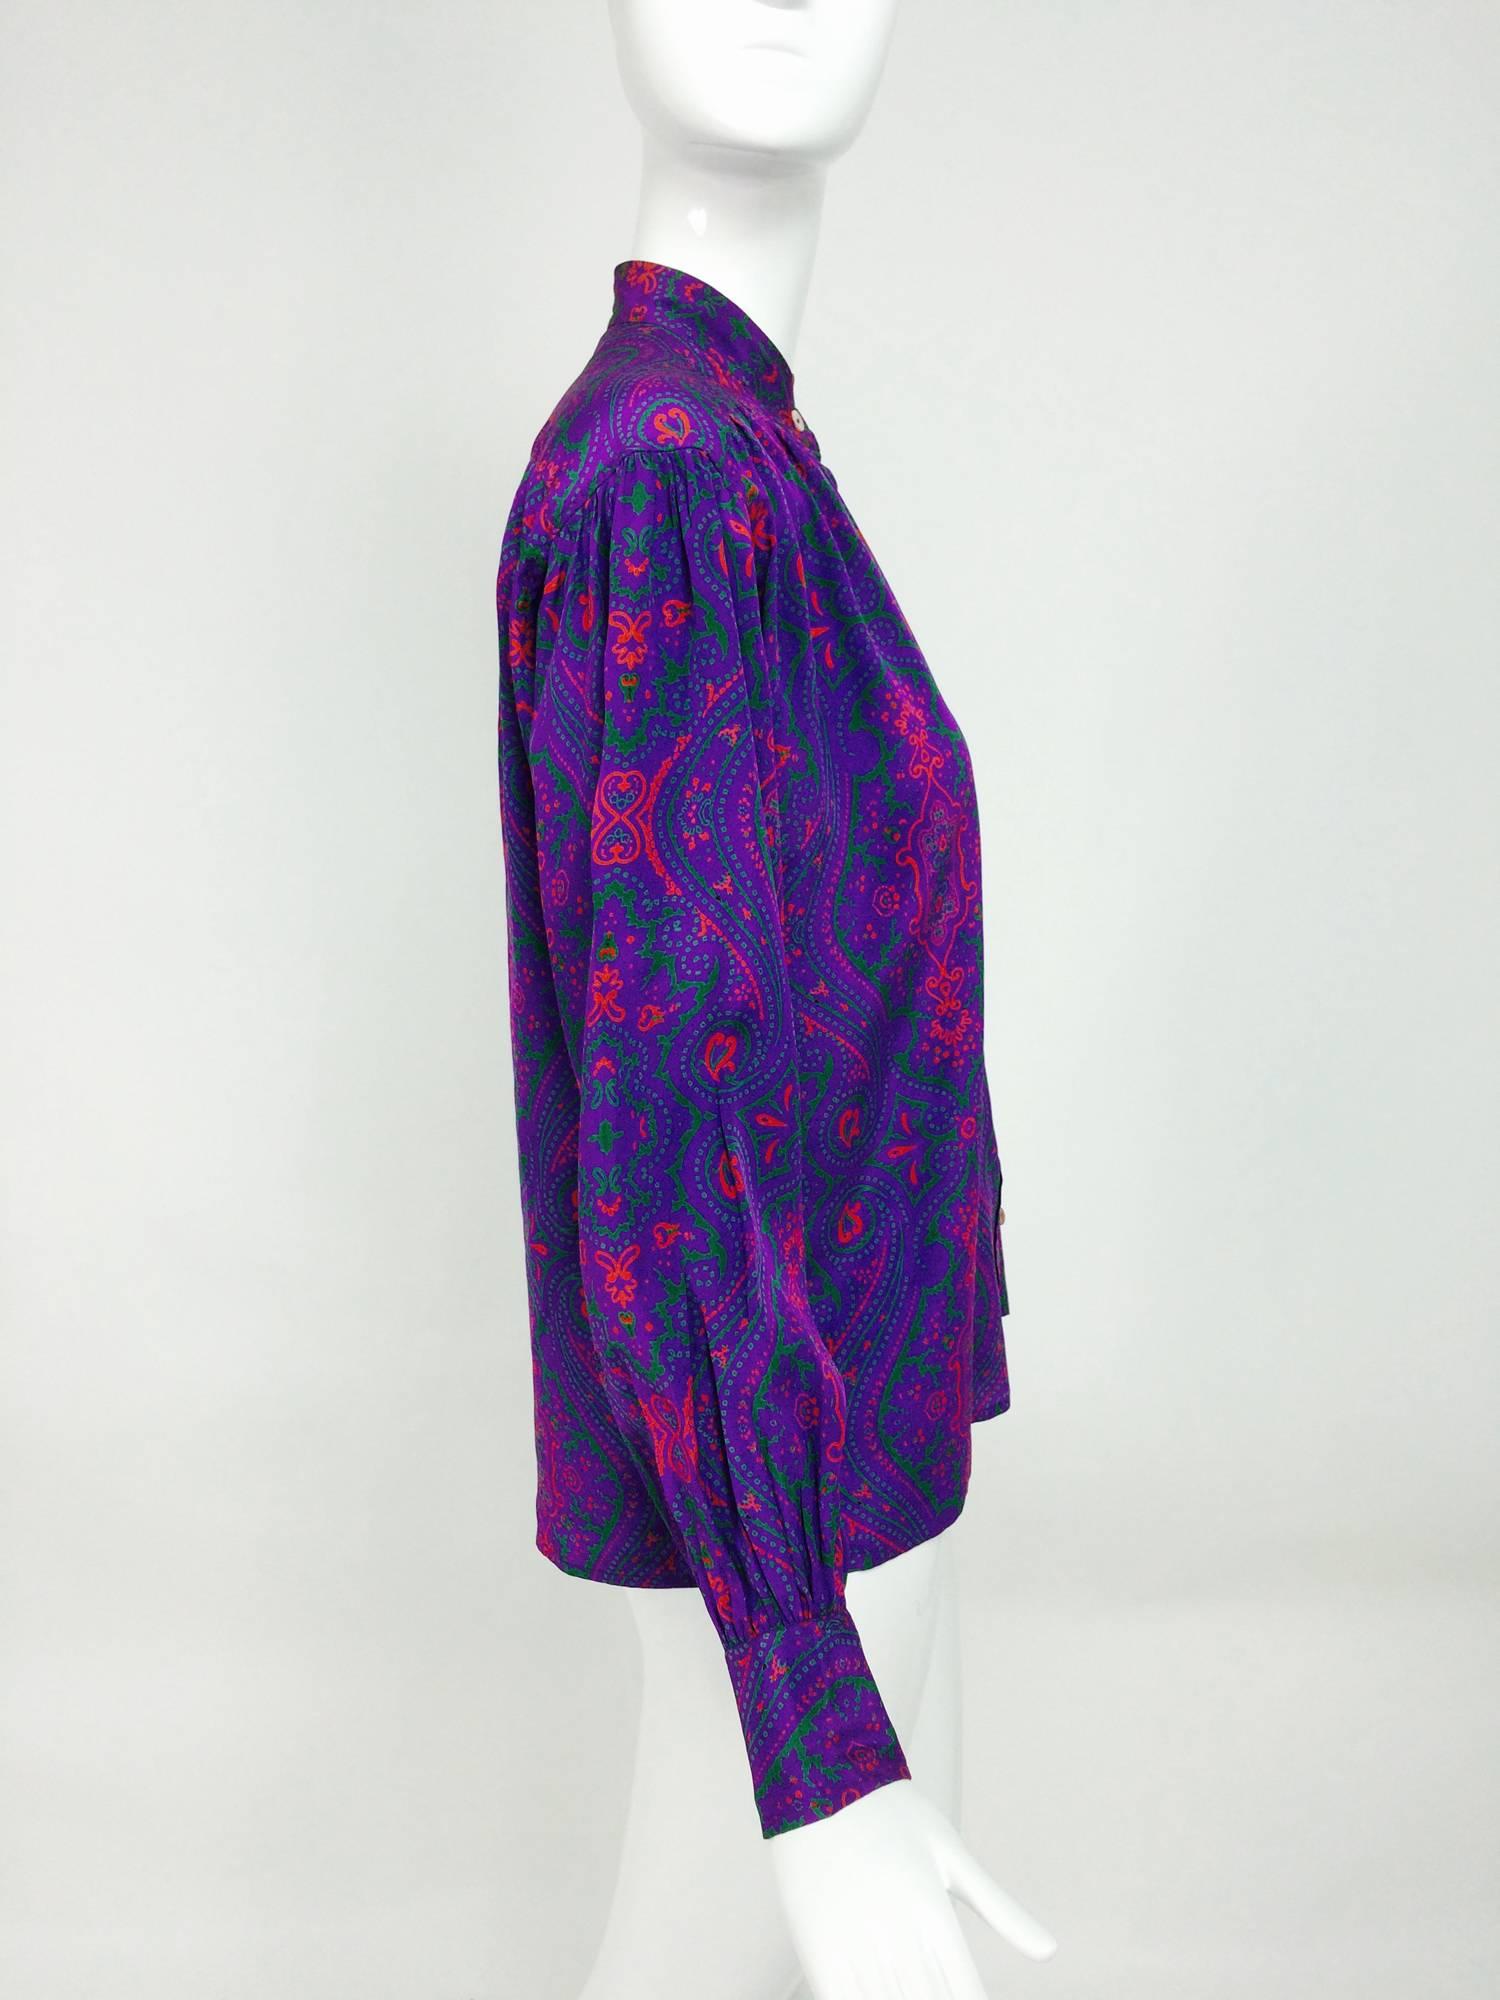 Women's Yves Saint Laurent Moorish print silk blouse 1970s  38